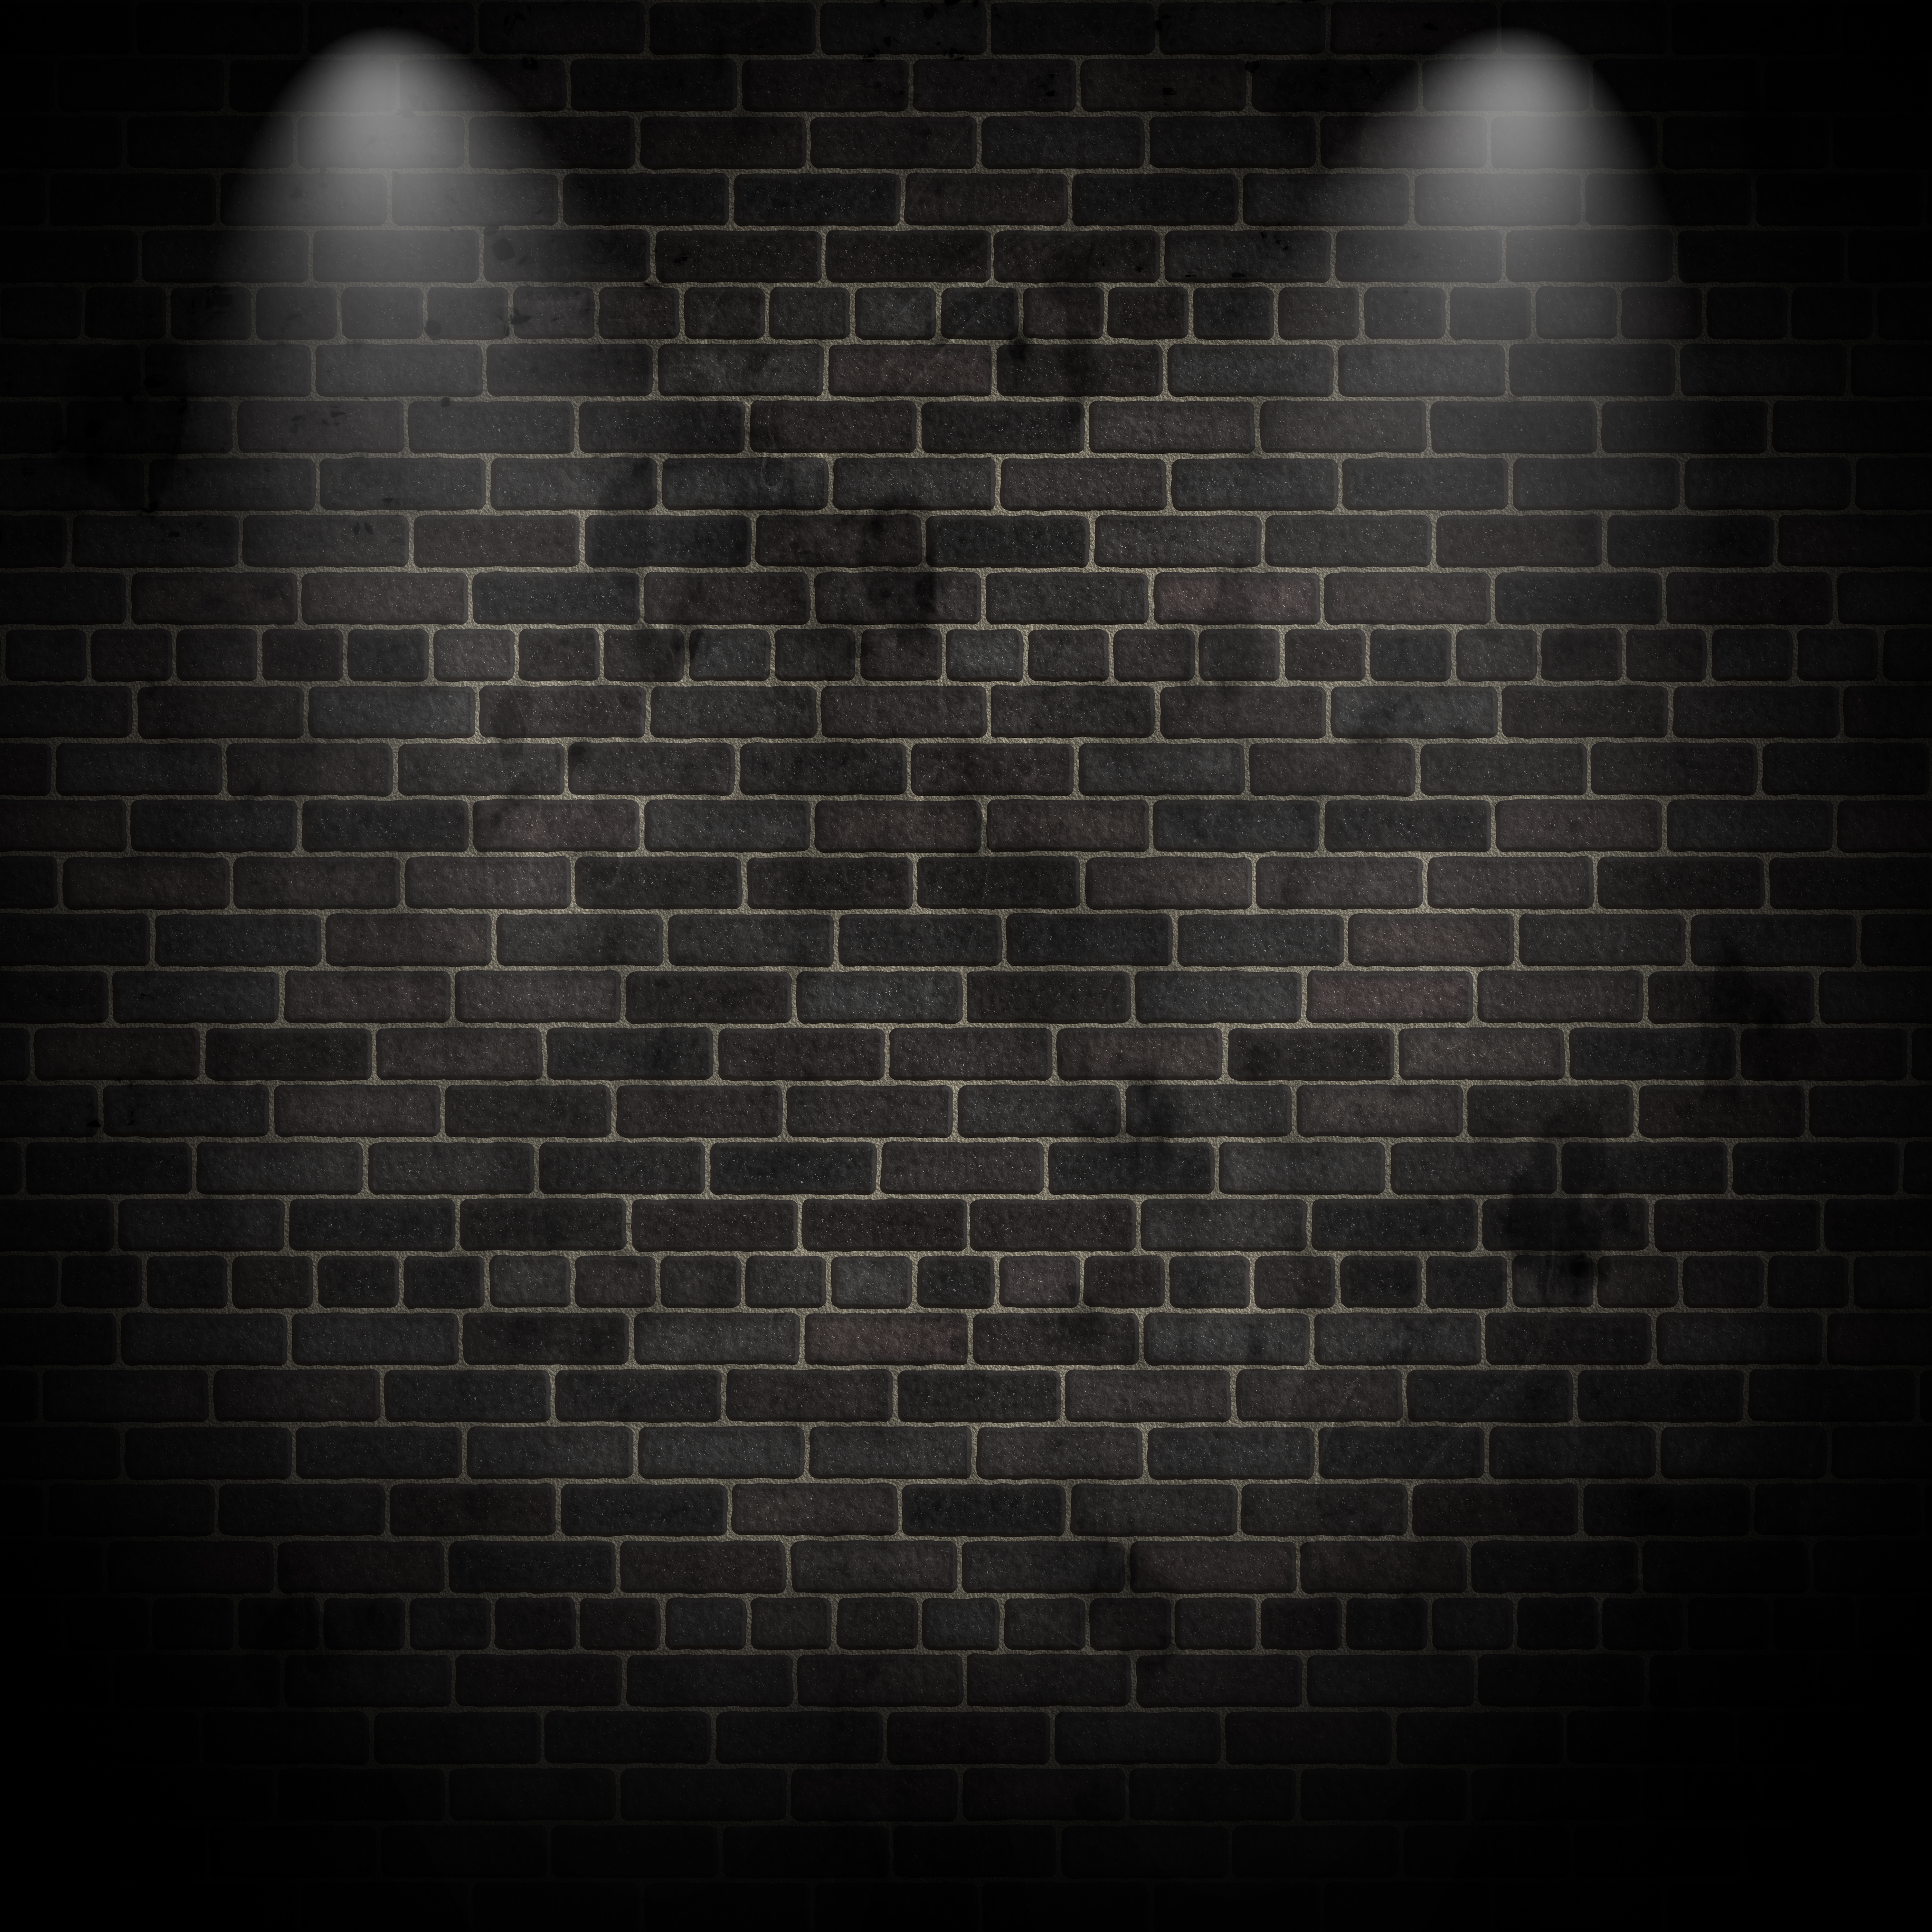 3D render of spotlights on a grunge brick wall